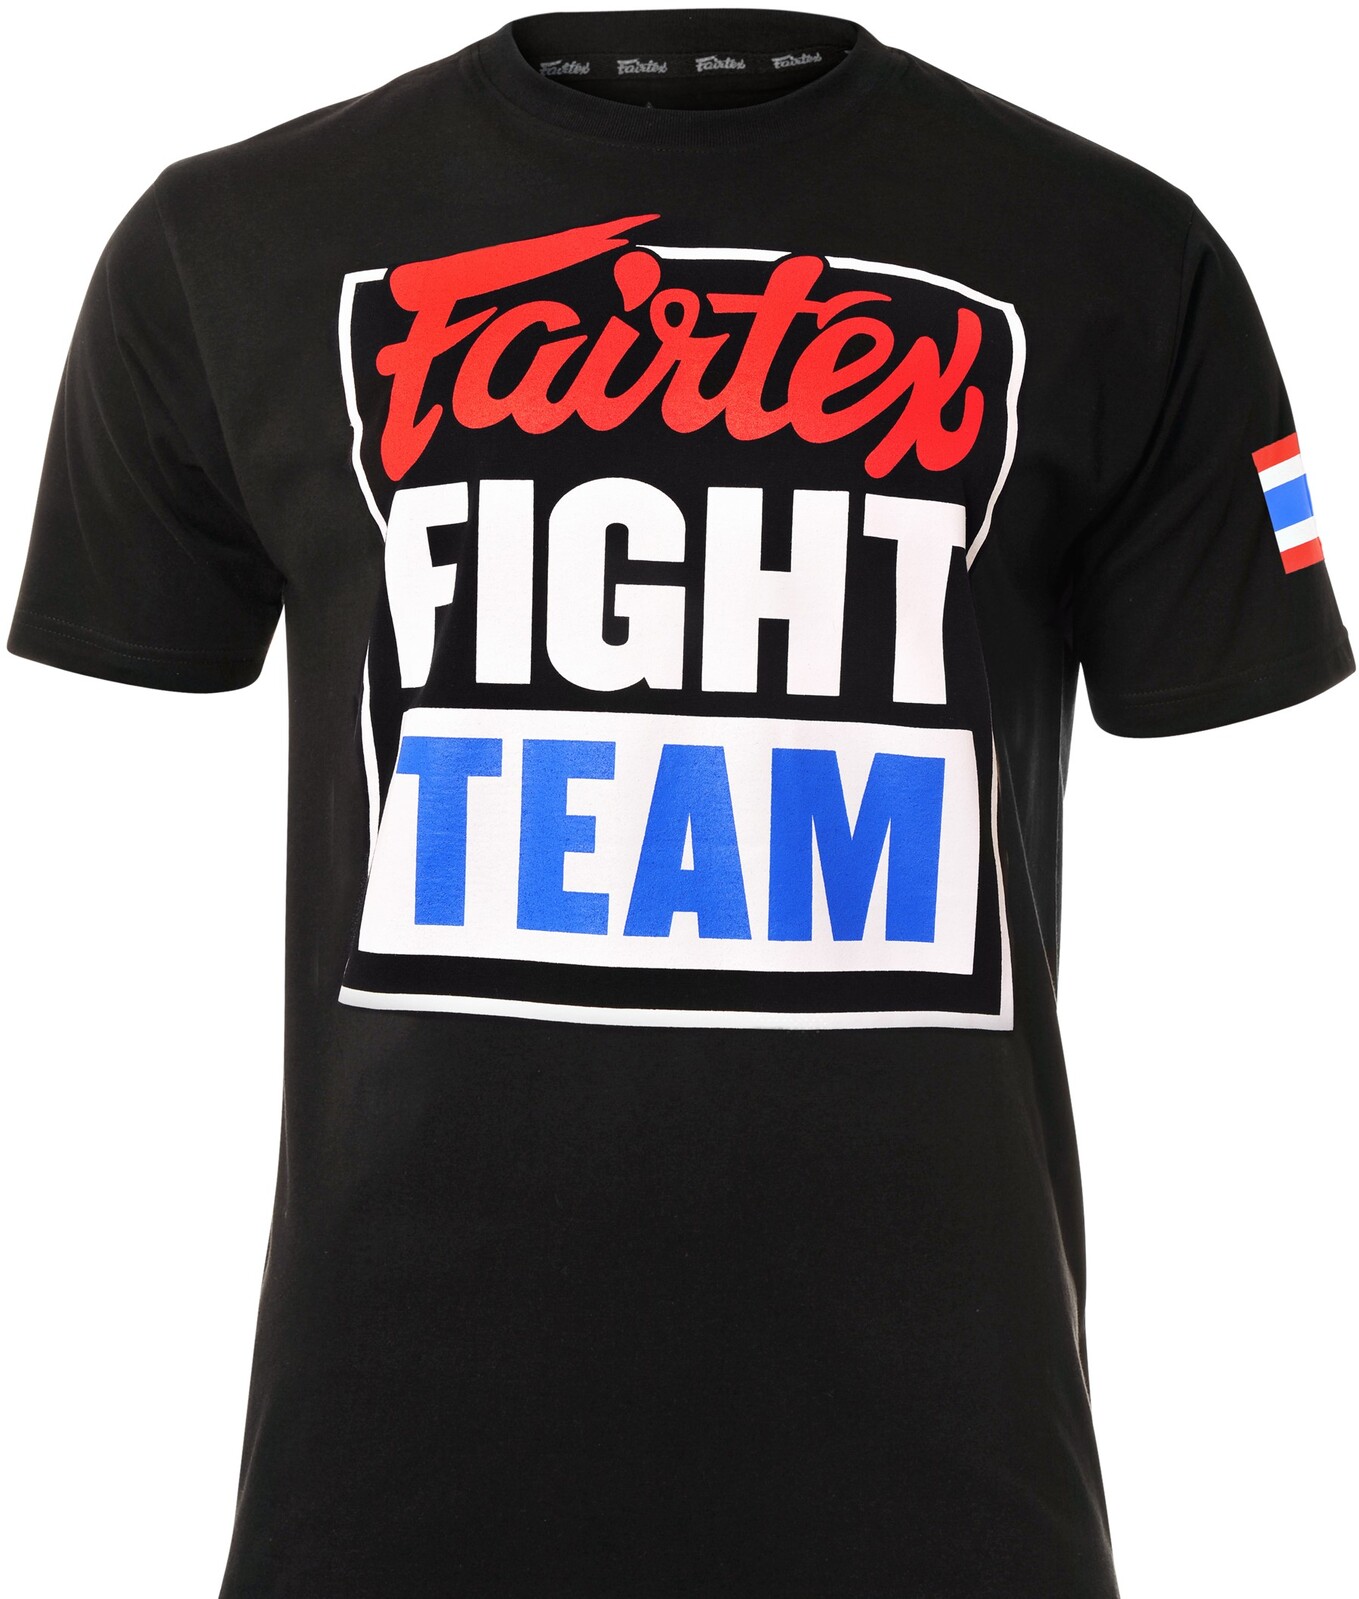 FAIRTEX - T Shirt - Fight Team - BLACK/BLUE (TST51) - Extra Large